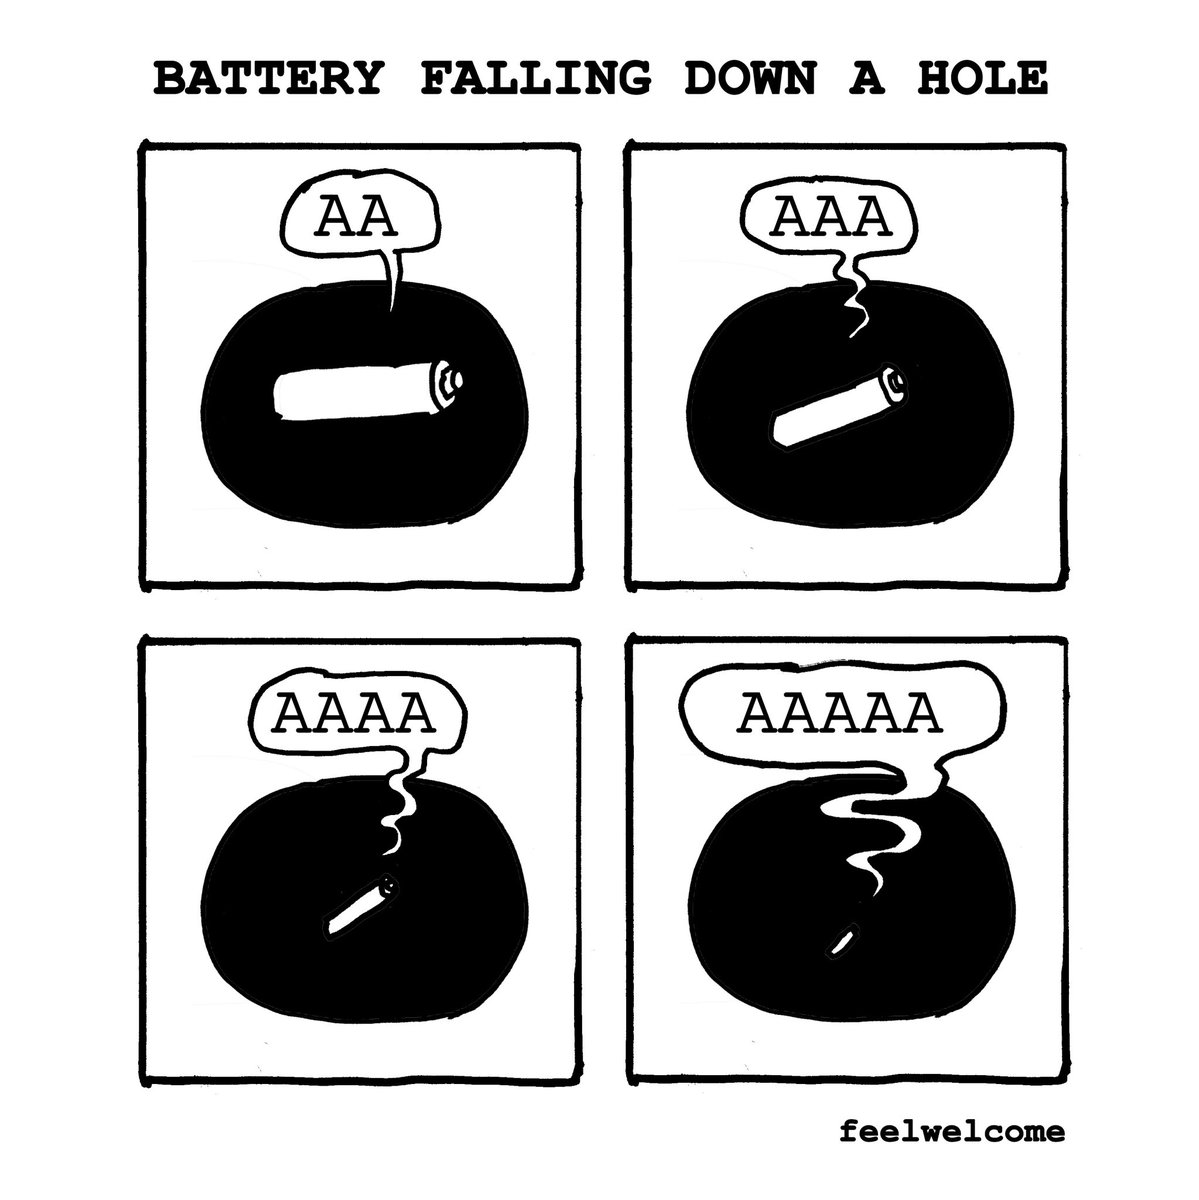 Battery falling down a hole.jpg